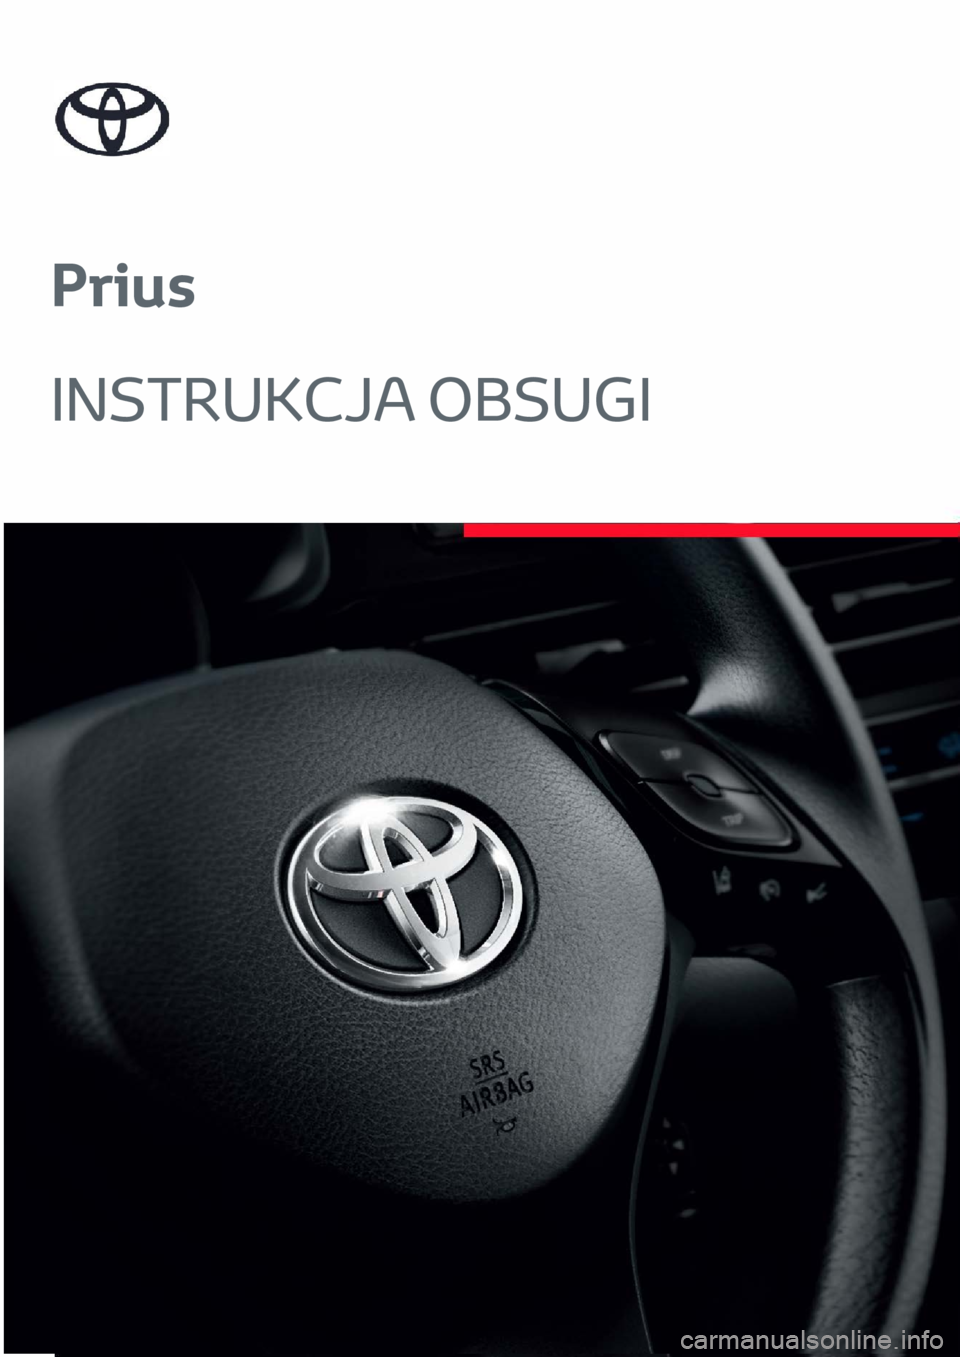 TOYOTA PRIUS 2023  Instrukcja obsługi (in Polish) Prius
INSTRUKCJA OBSUGI 